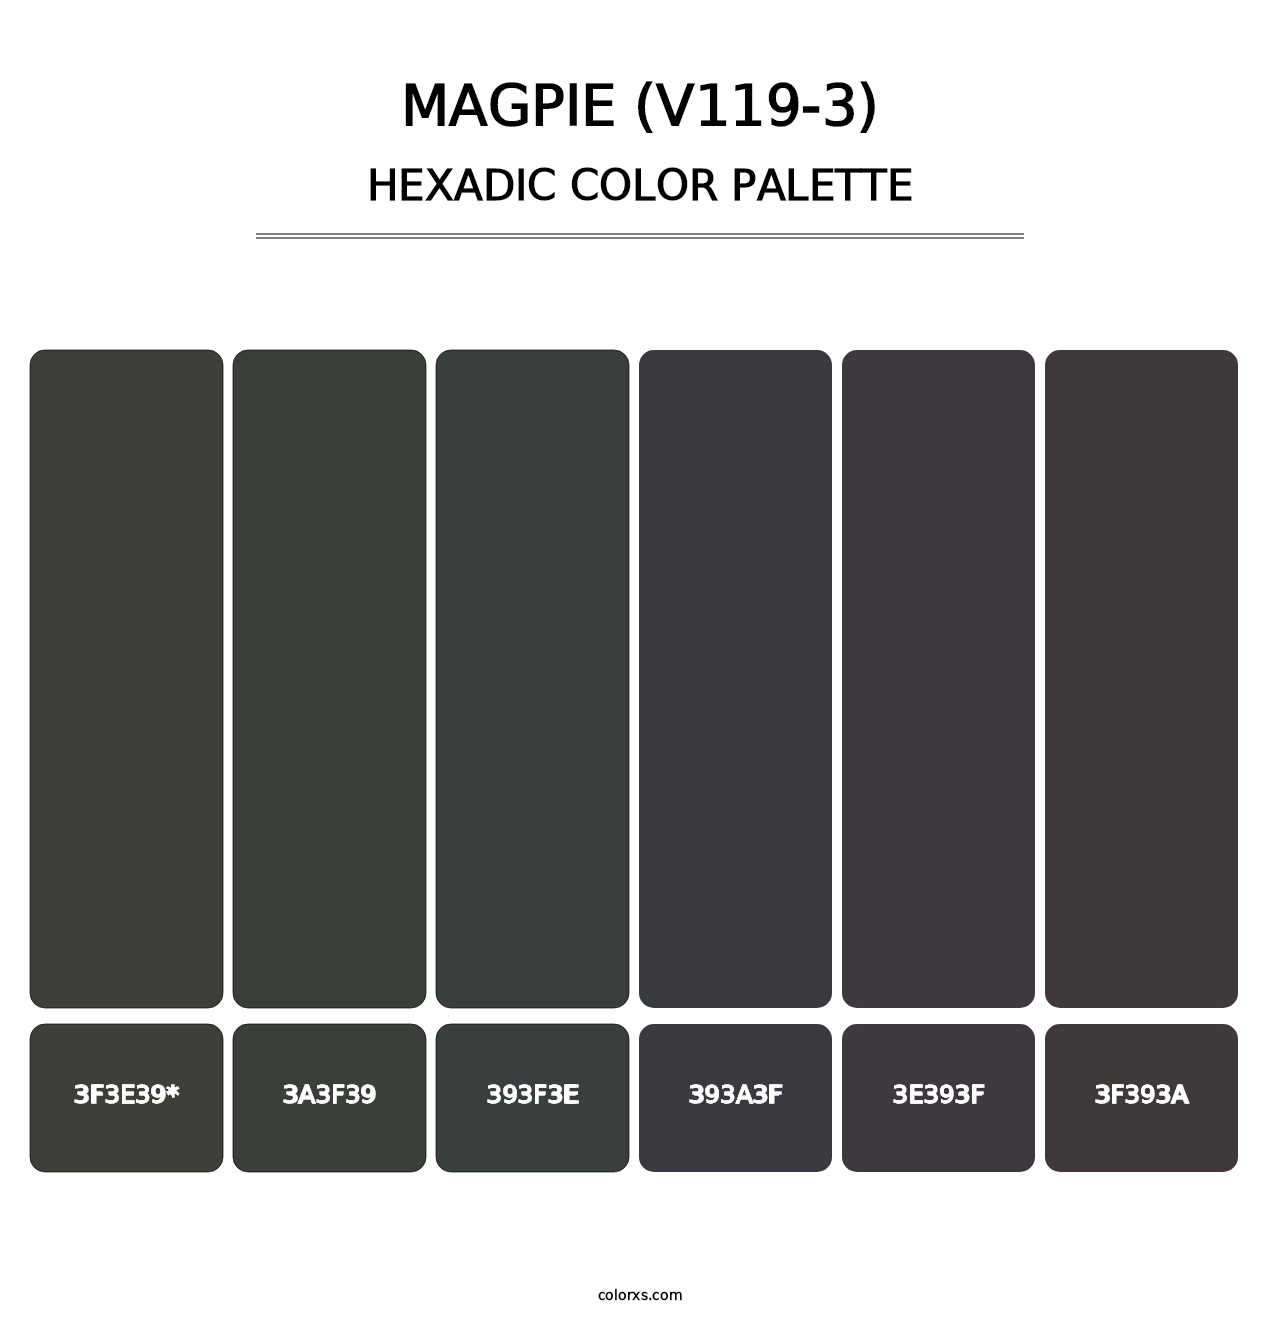 Magpie (V119-3) - Hexadic Color Palette